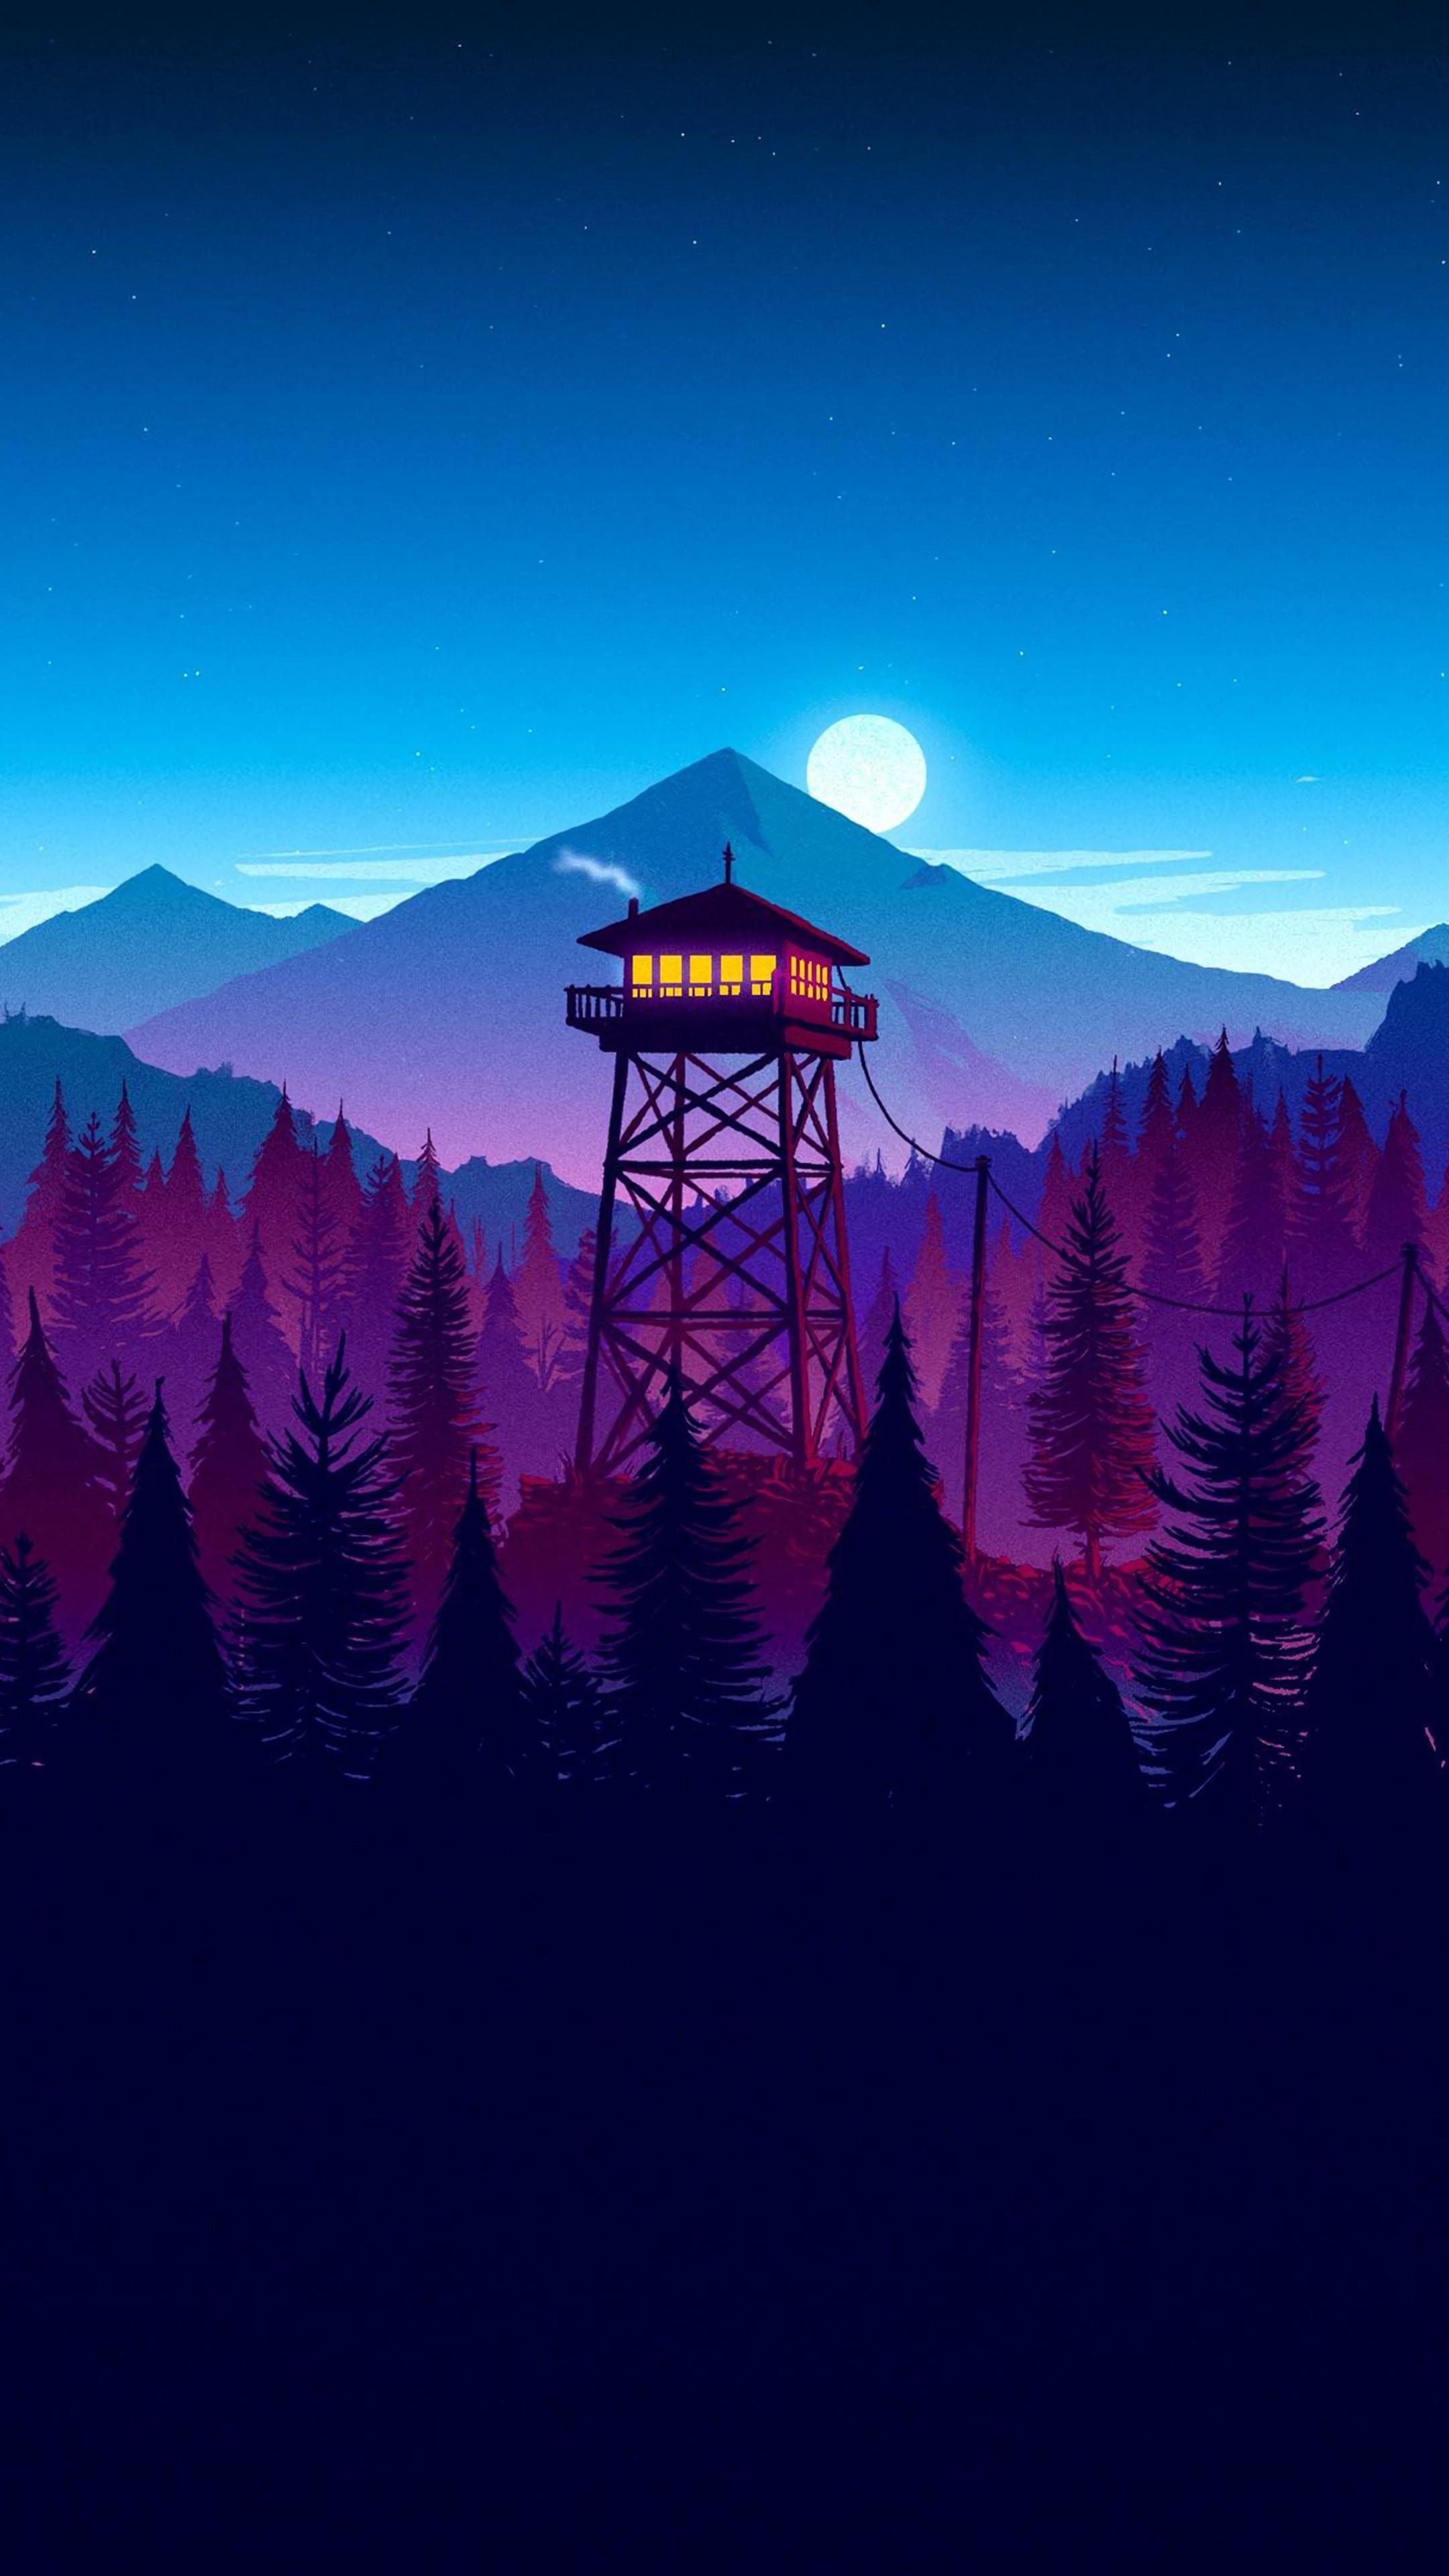 Landscape Mountains Forest Watch Tower Minimalist Digital Art 4k